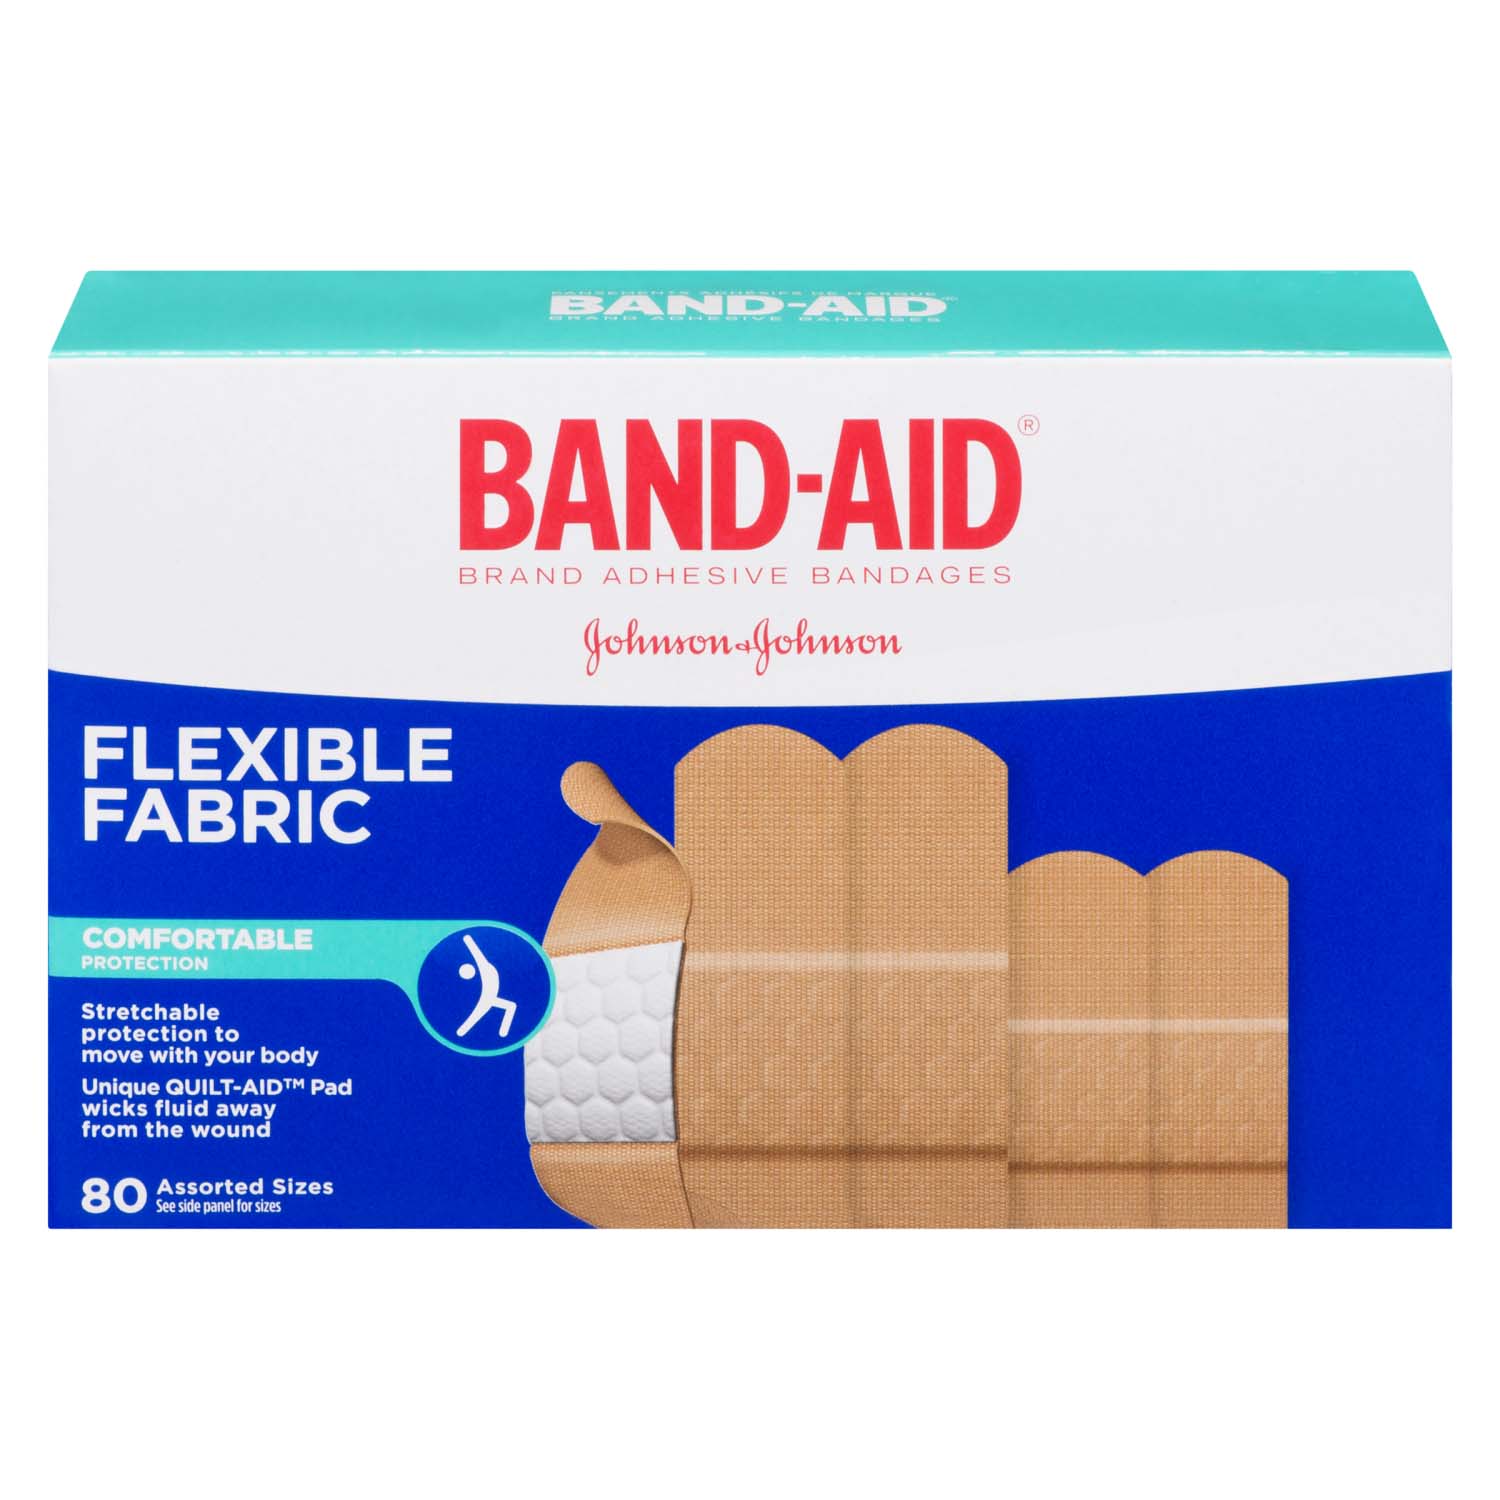 Band-Aid Brand Adhesive Bandages Flexible Fabric 80 Assorted Sizes